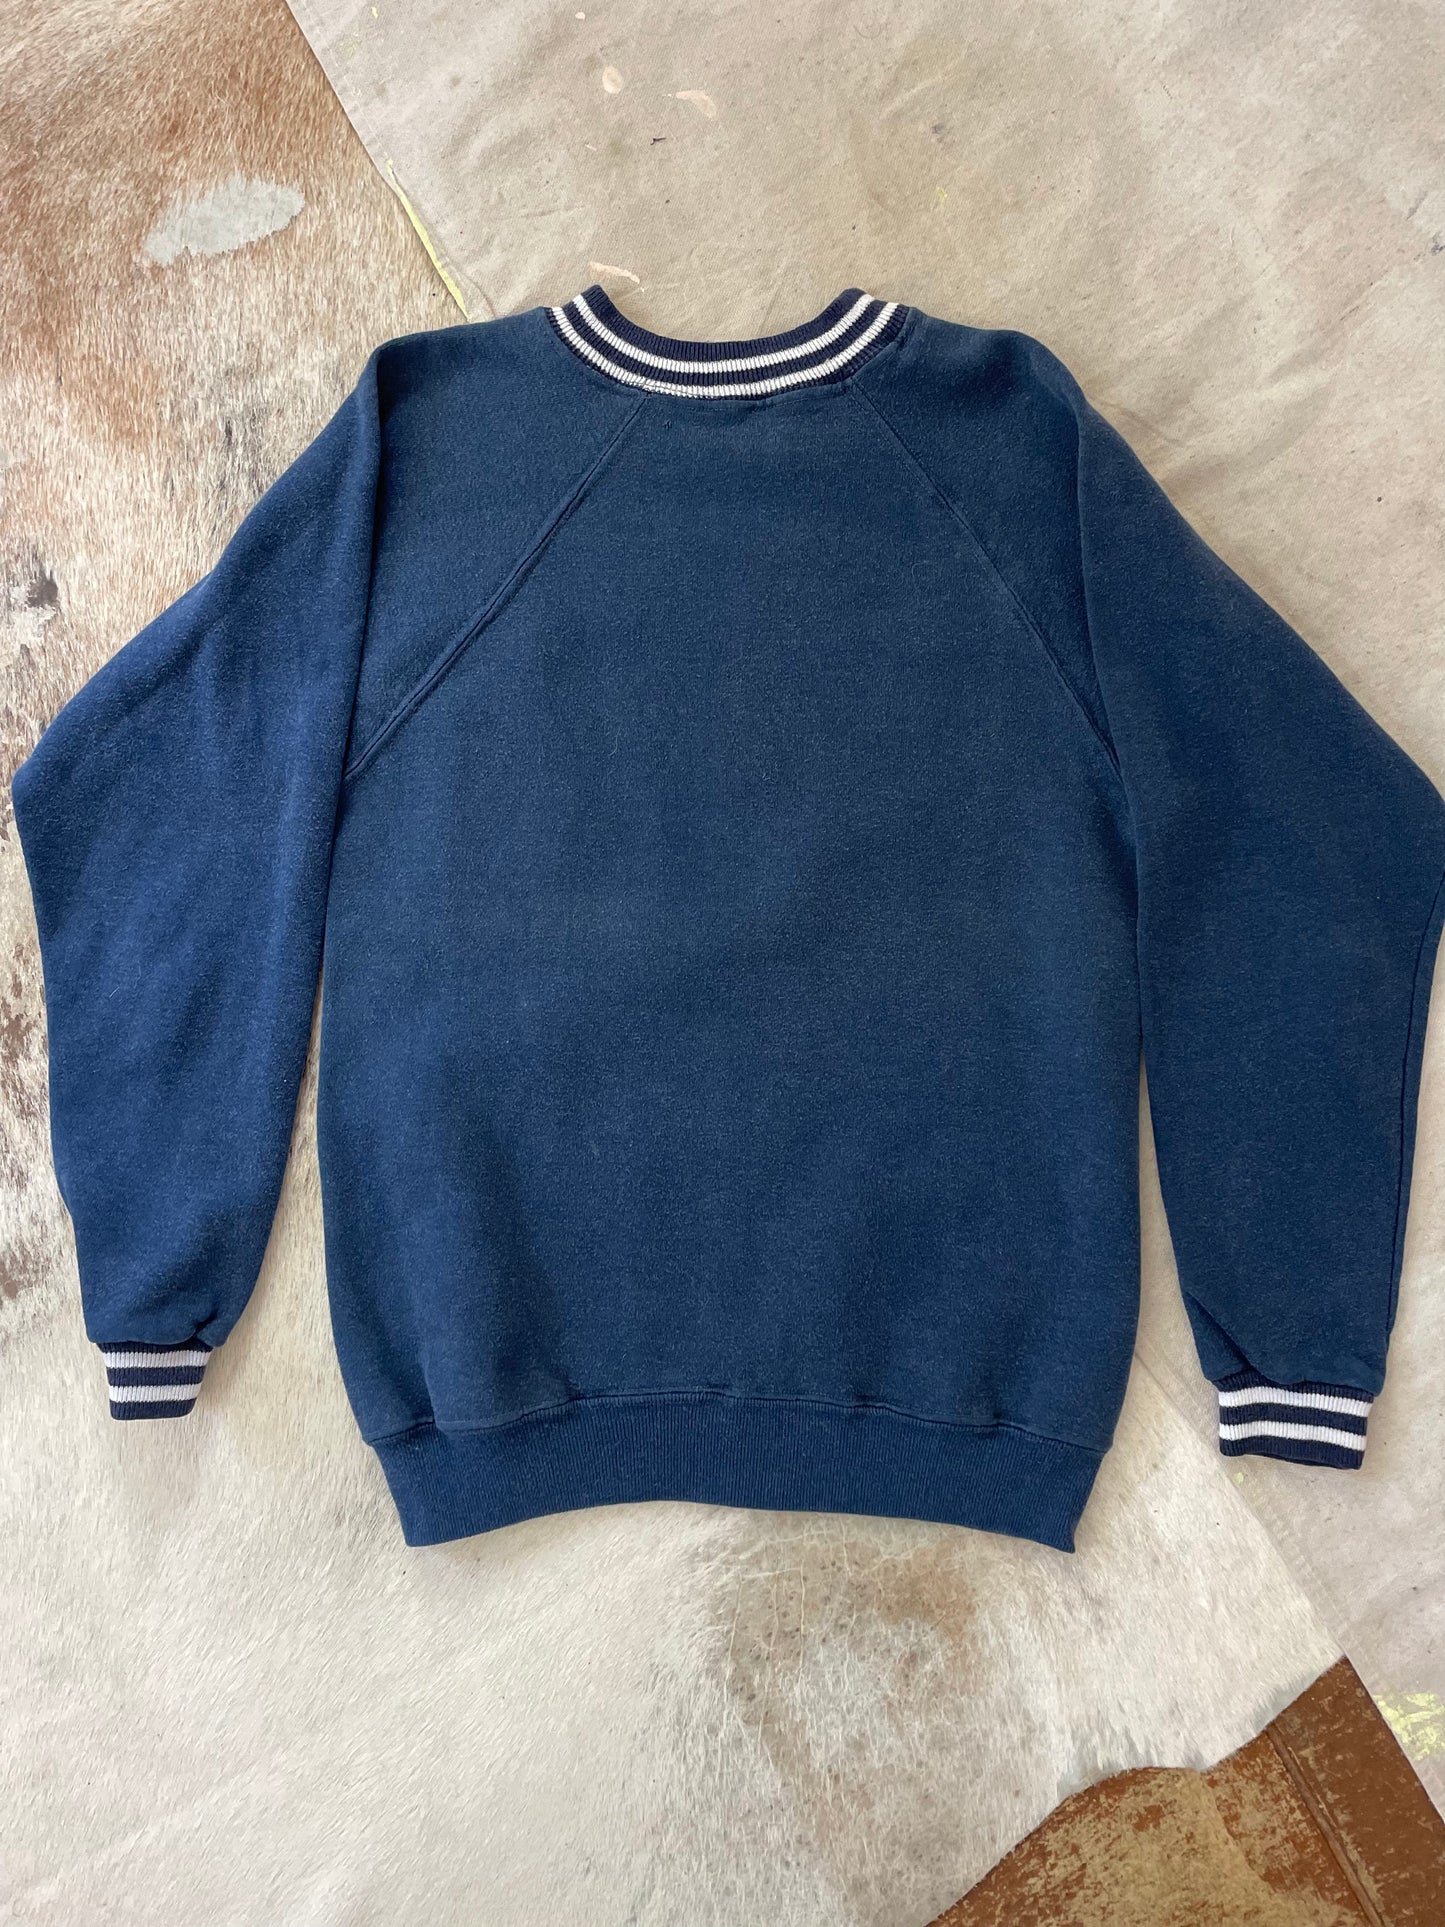 60s Navy Blue Ringer Style Sweatshirt